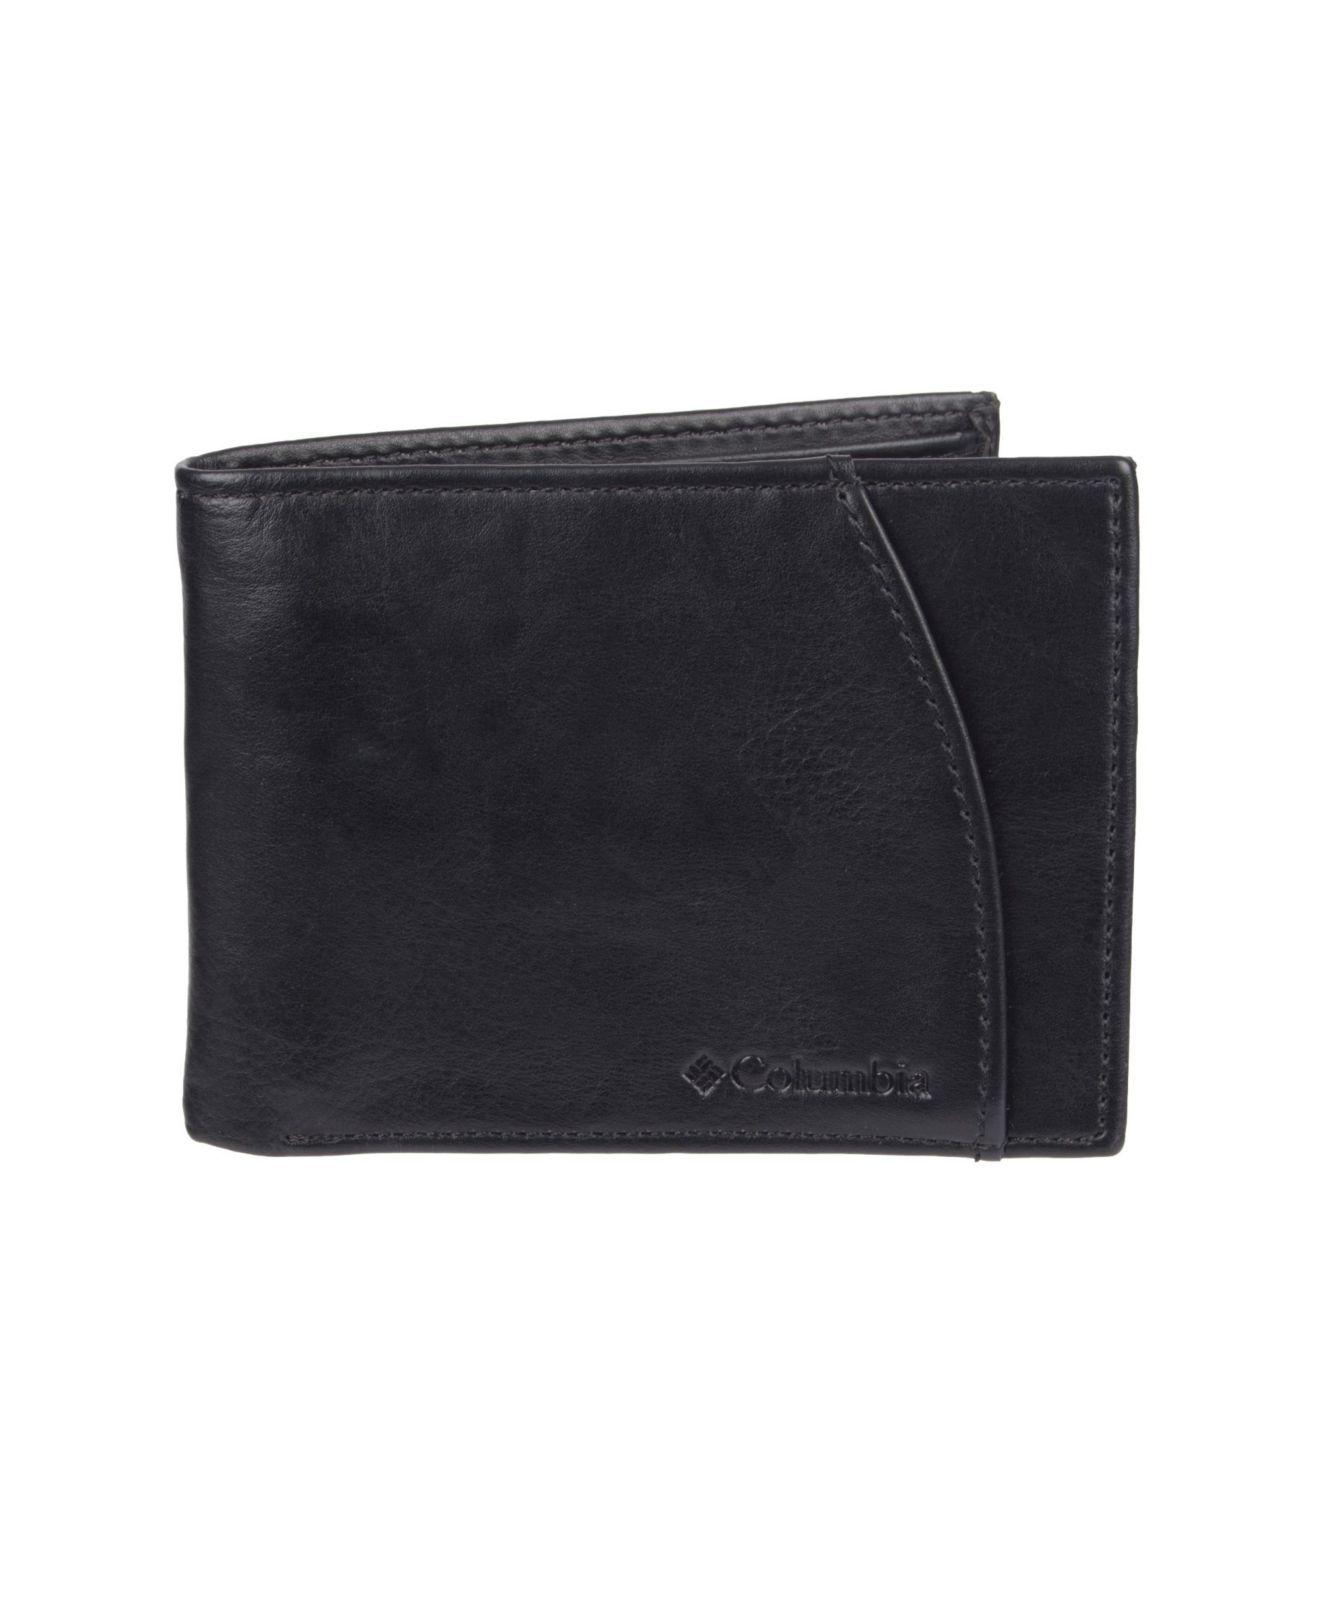 Columbia Wallet in Black for Men - Lyst